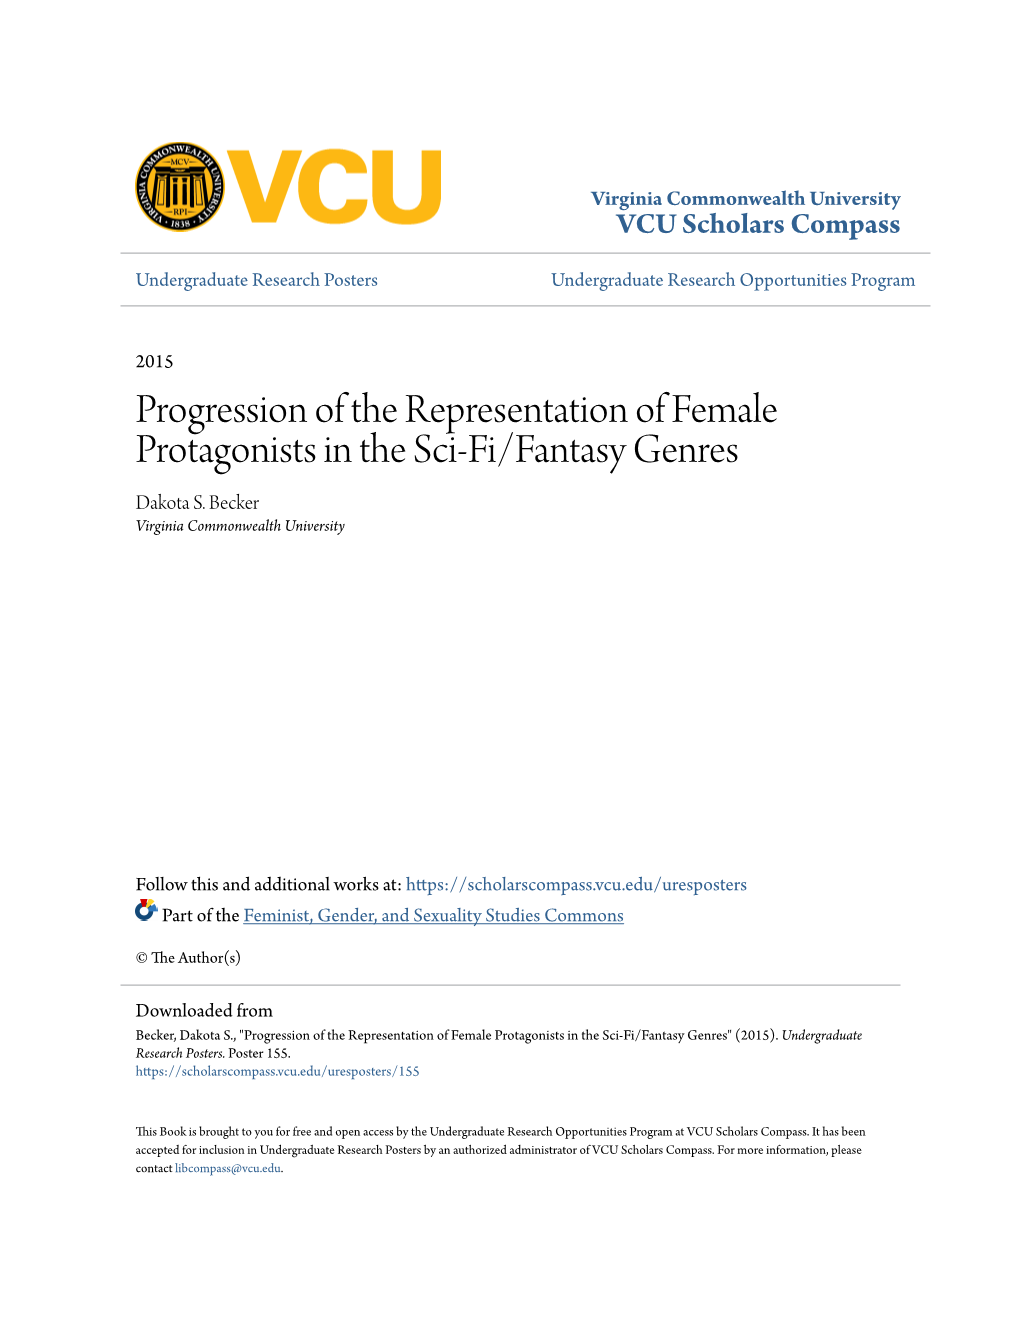 Progression of the Representation of Female Protagonists in the Sci-Fi/Fantasy Genres Dakota S